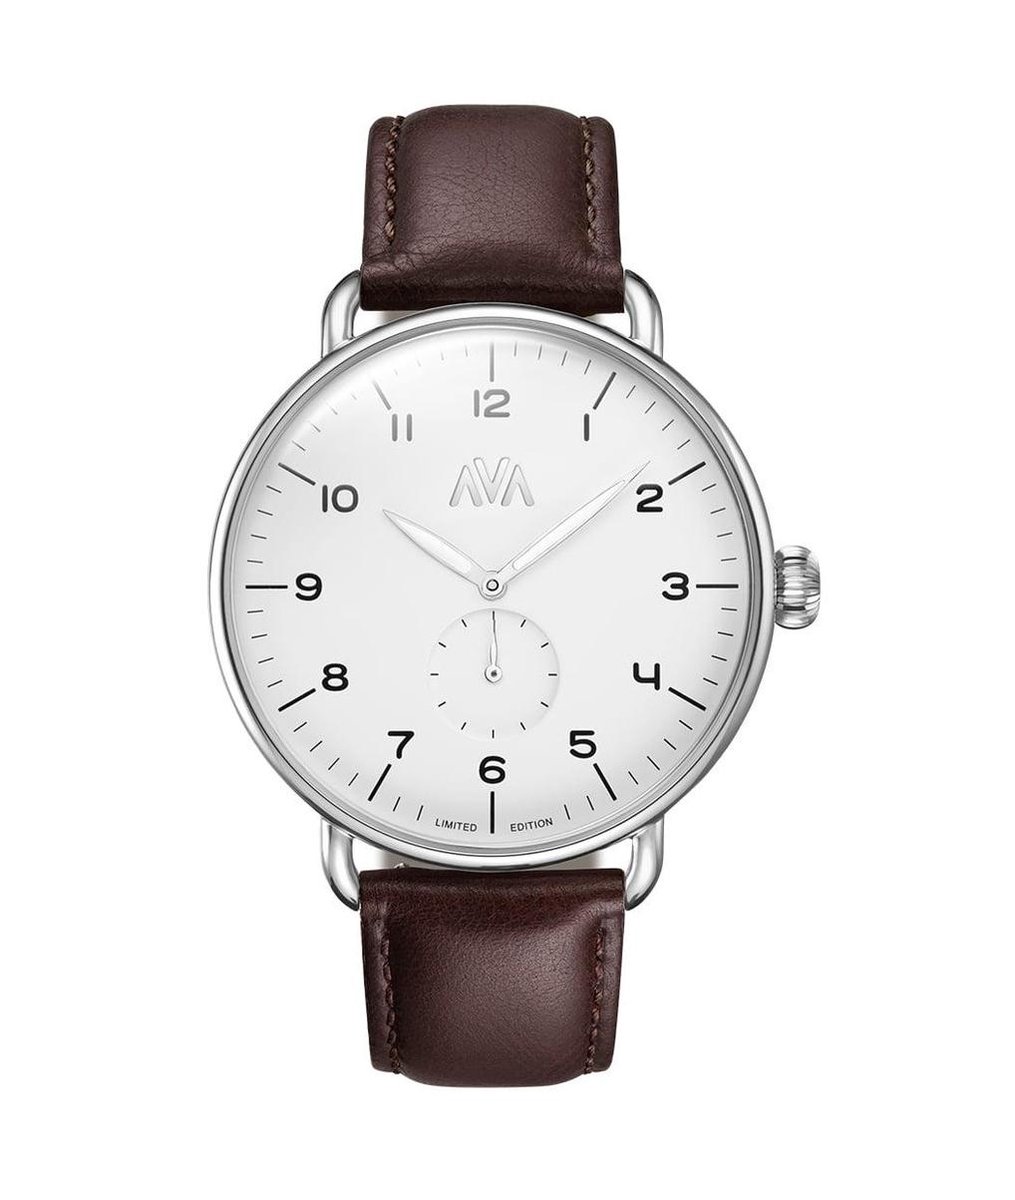 AVA Fríge Silver Mörkbrun - Unisex horloge - Donkerbruin leren band - Zilverkleurig - Ø 43mm - Limited Edition